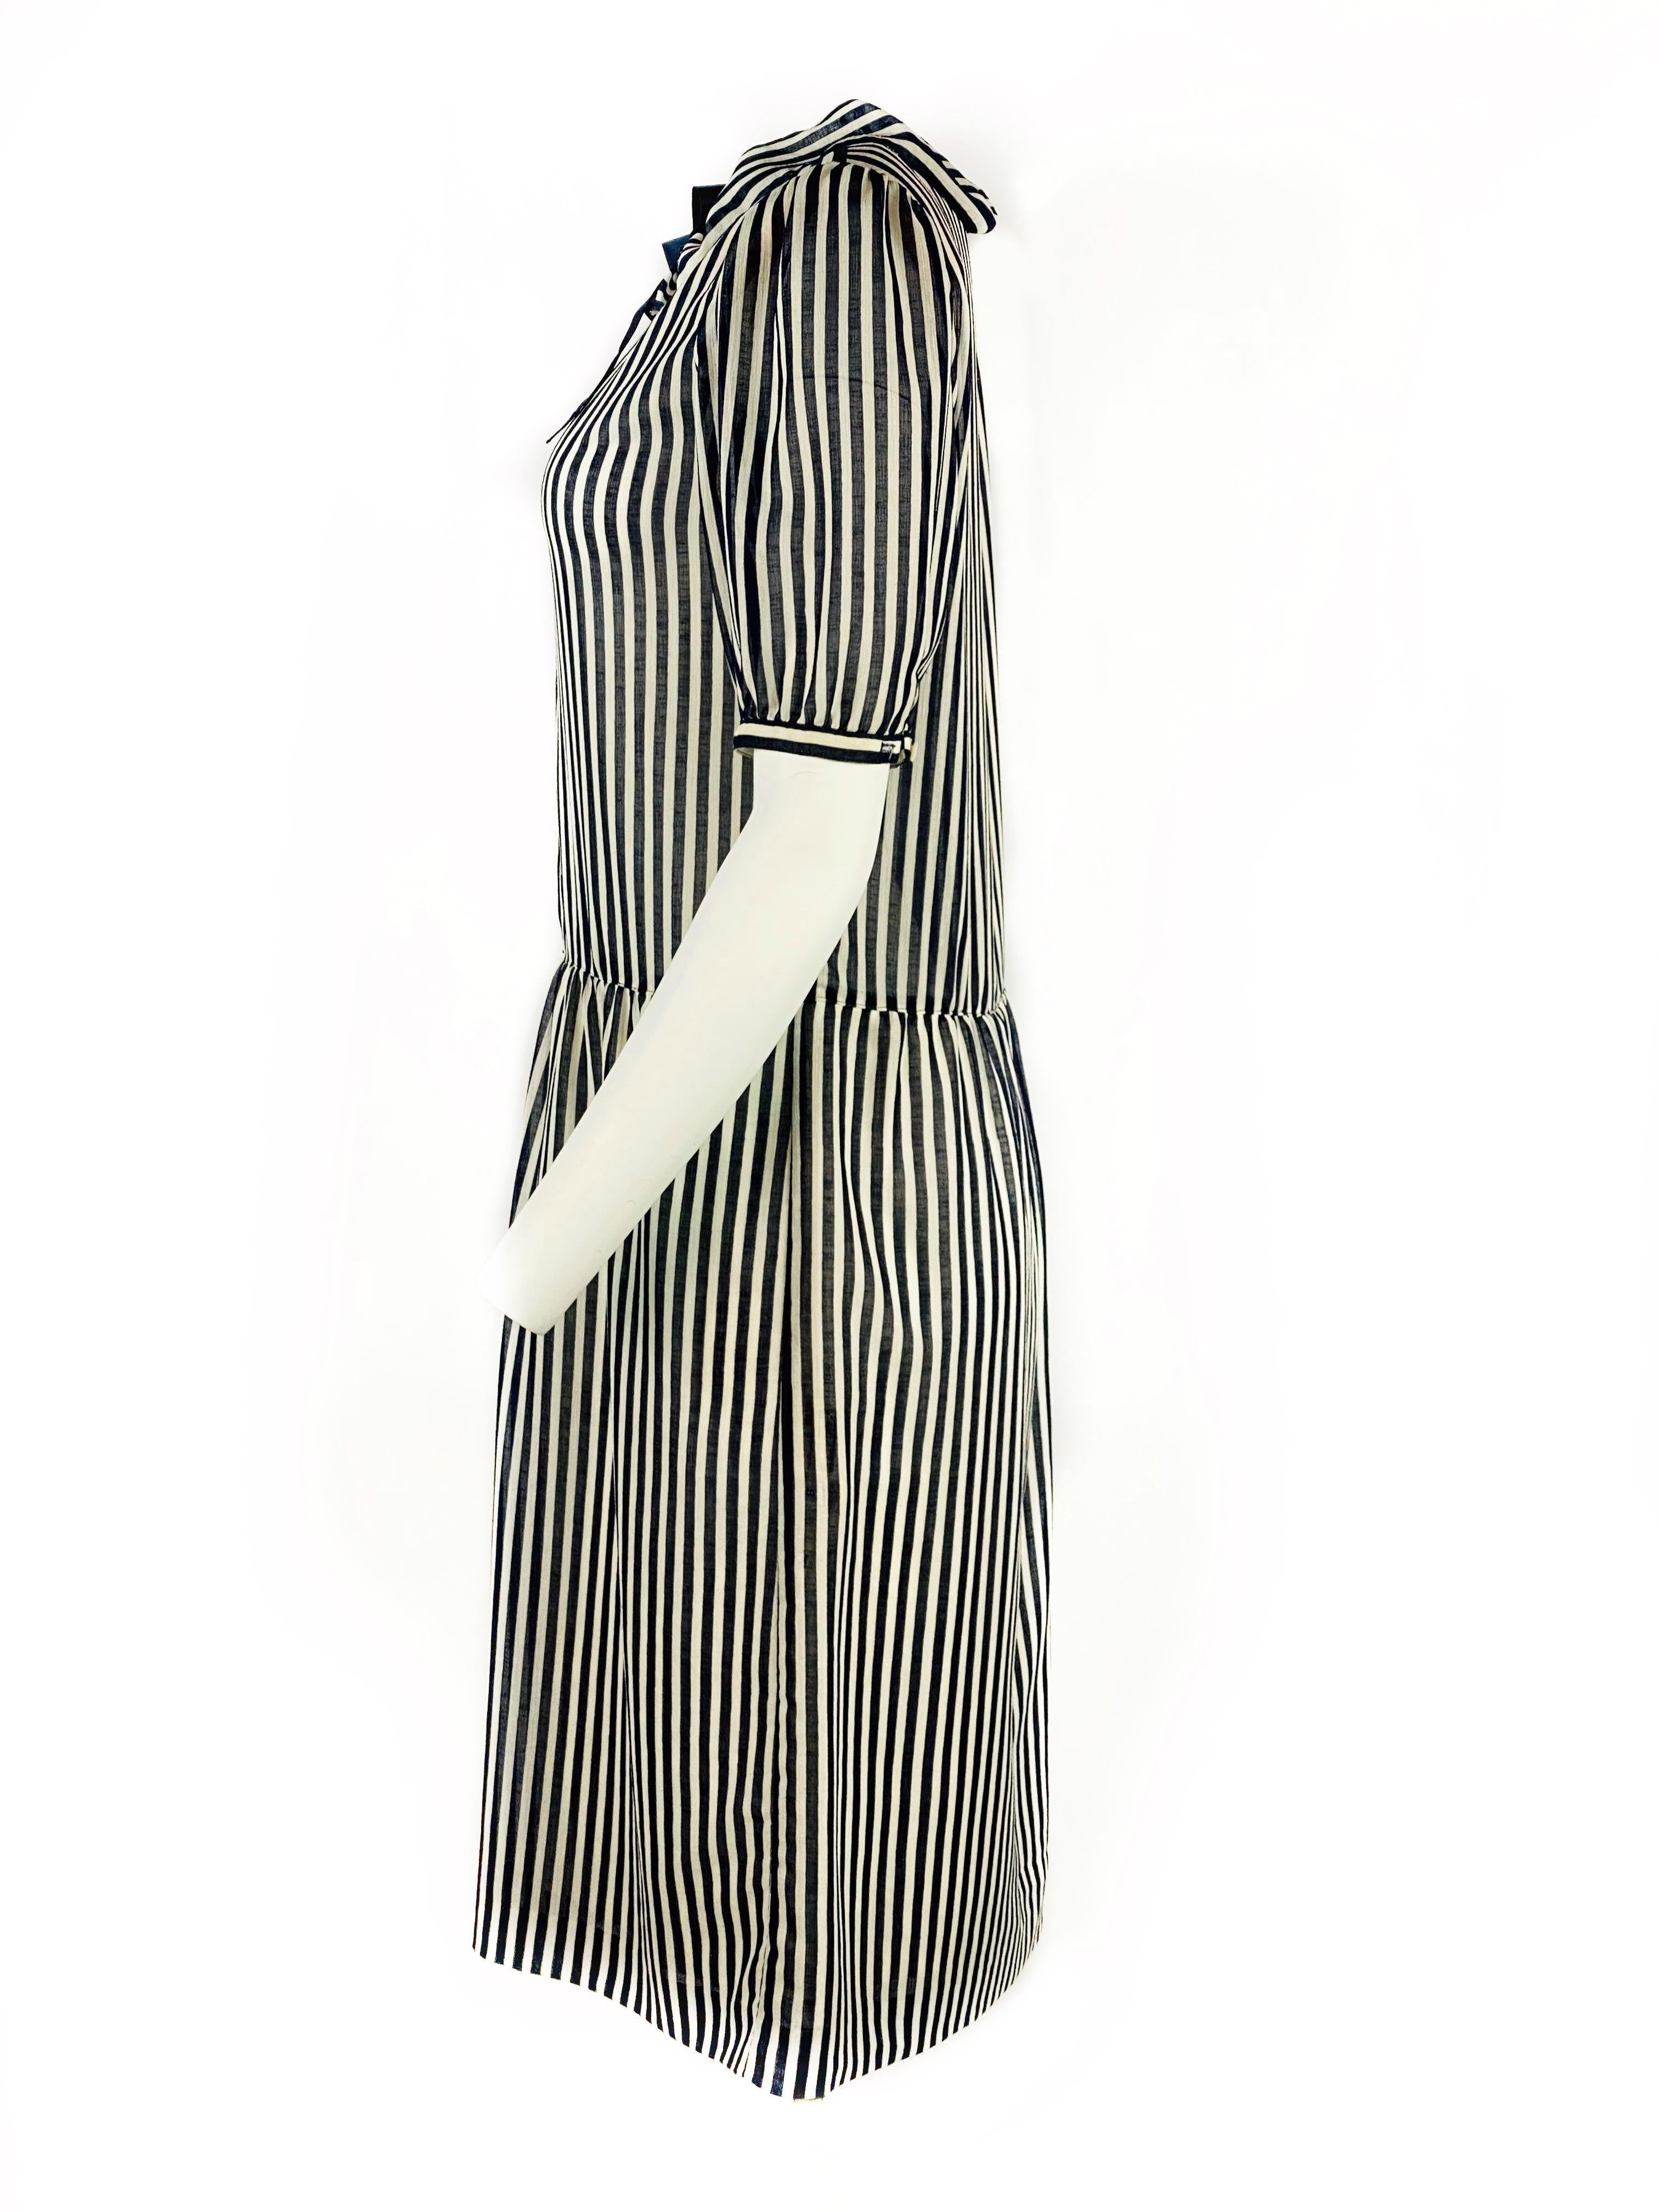 Gray HANAE MORI Navy and White Striped Short Sleeve Midi Dress w/ Bow Size US 8 